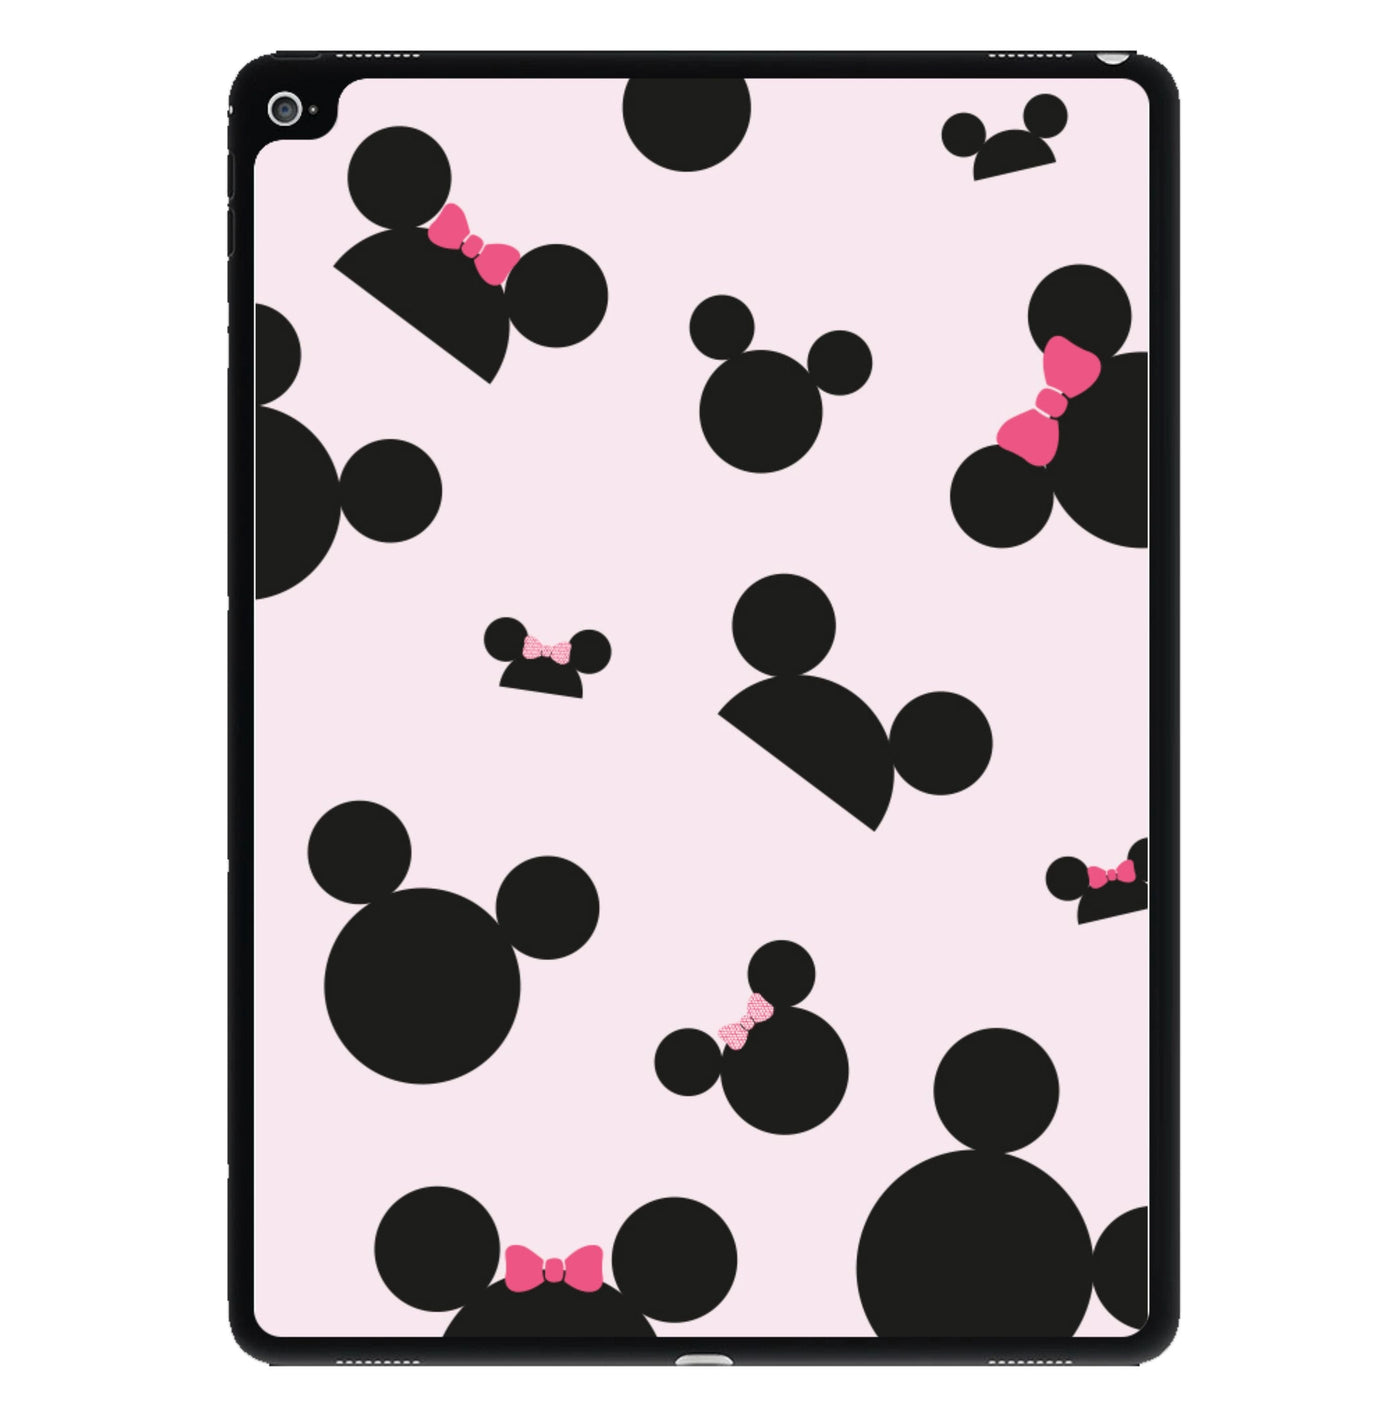 Mickey and Minnie Hats - Disney iPad Case